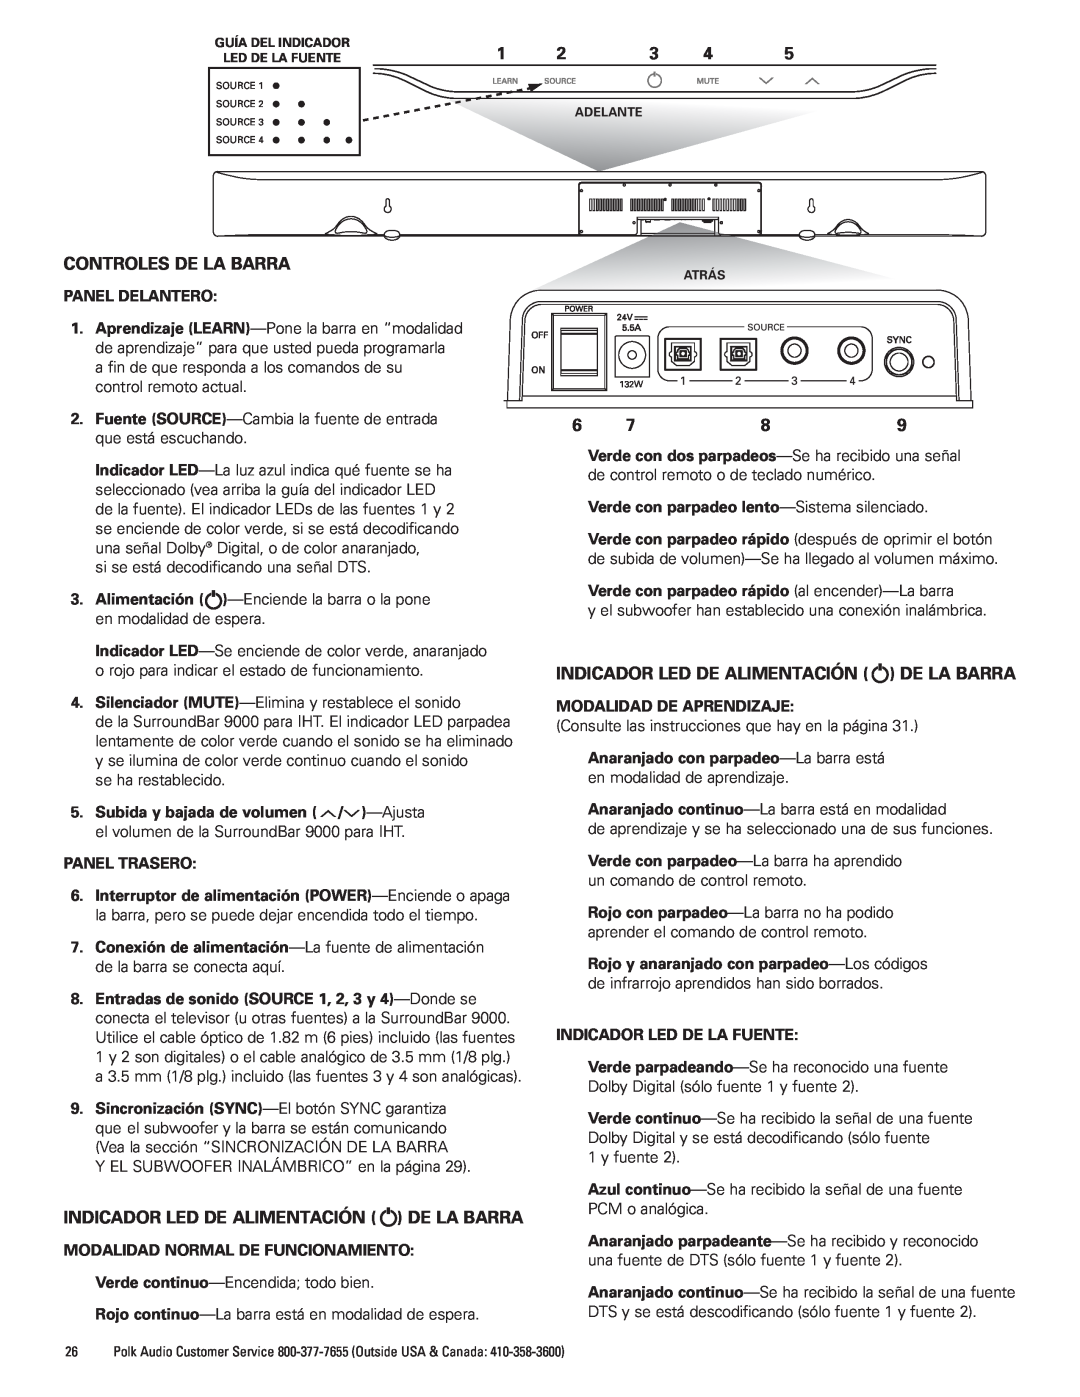 Polk Audio 9000 manual Controles De La Barra, Indicador Led De Alimentación De La Barra 